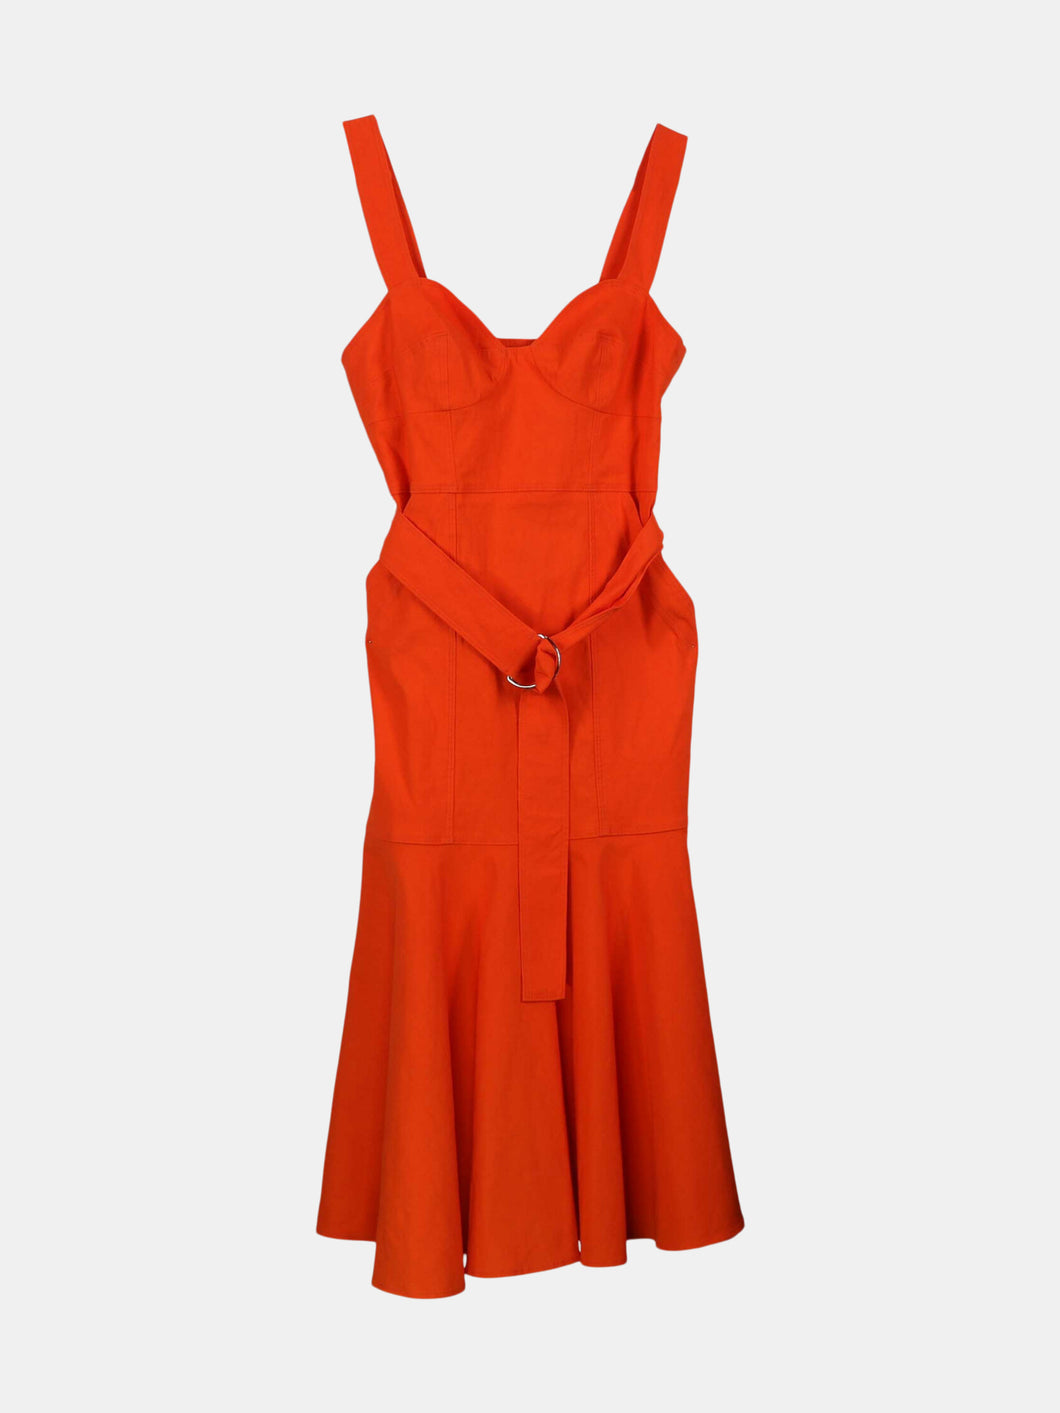 A.L.C Women's Orange Belted Flared Dress